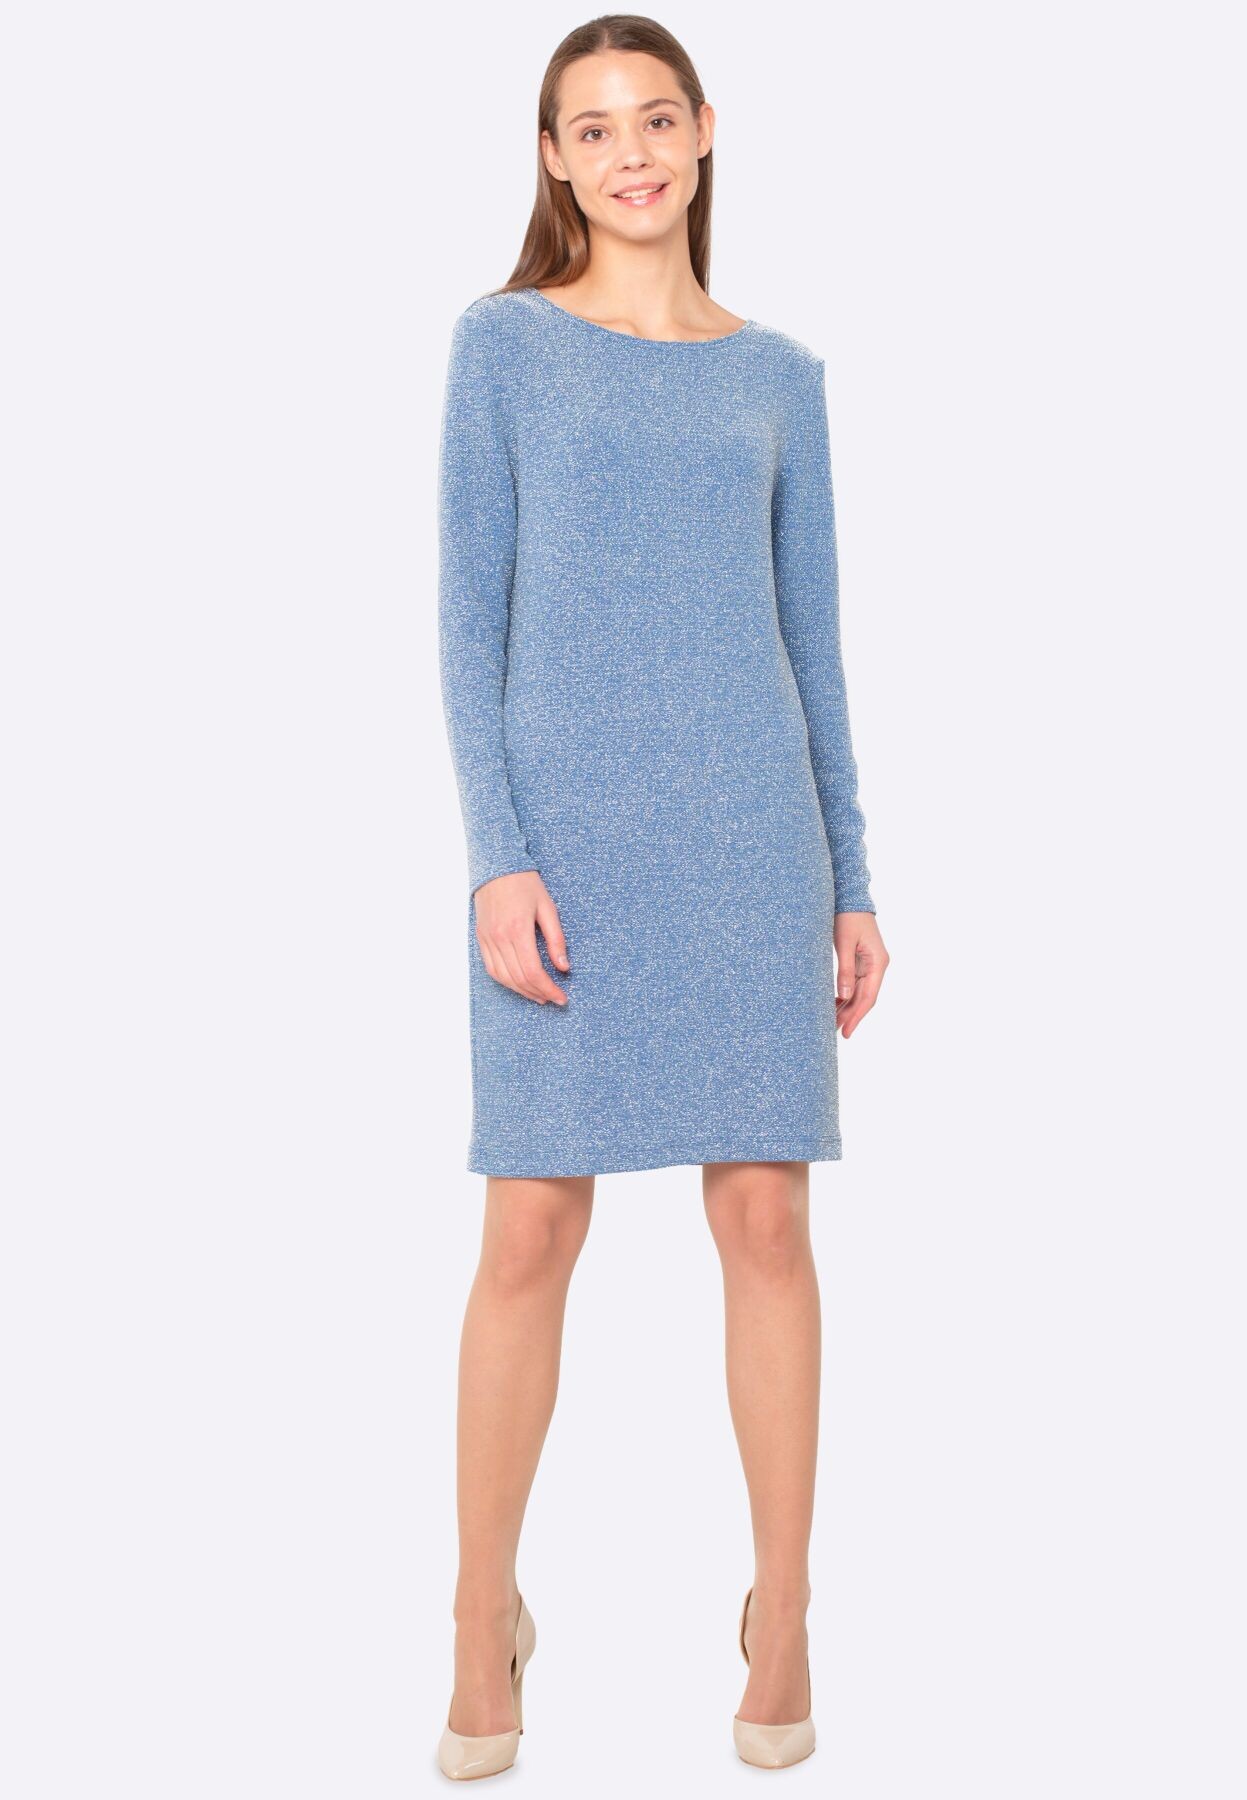 Blue elegant dress made of lurex knitwear 5676